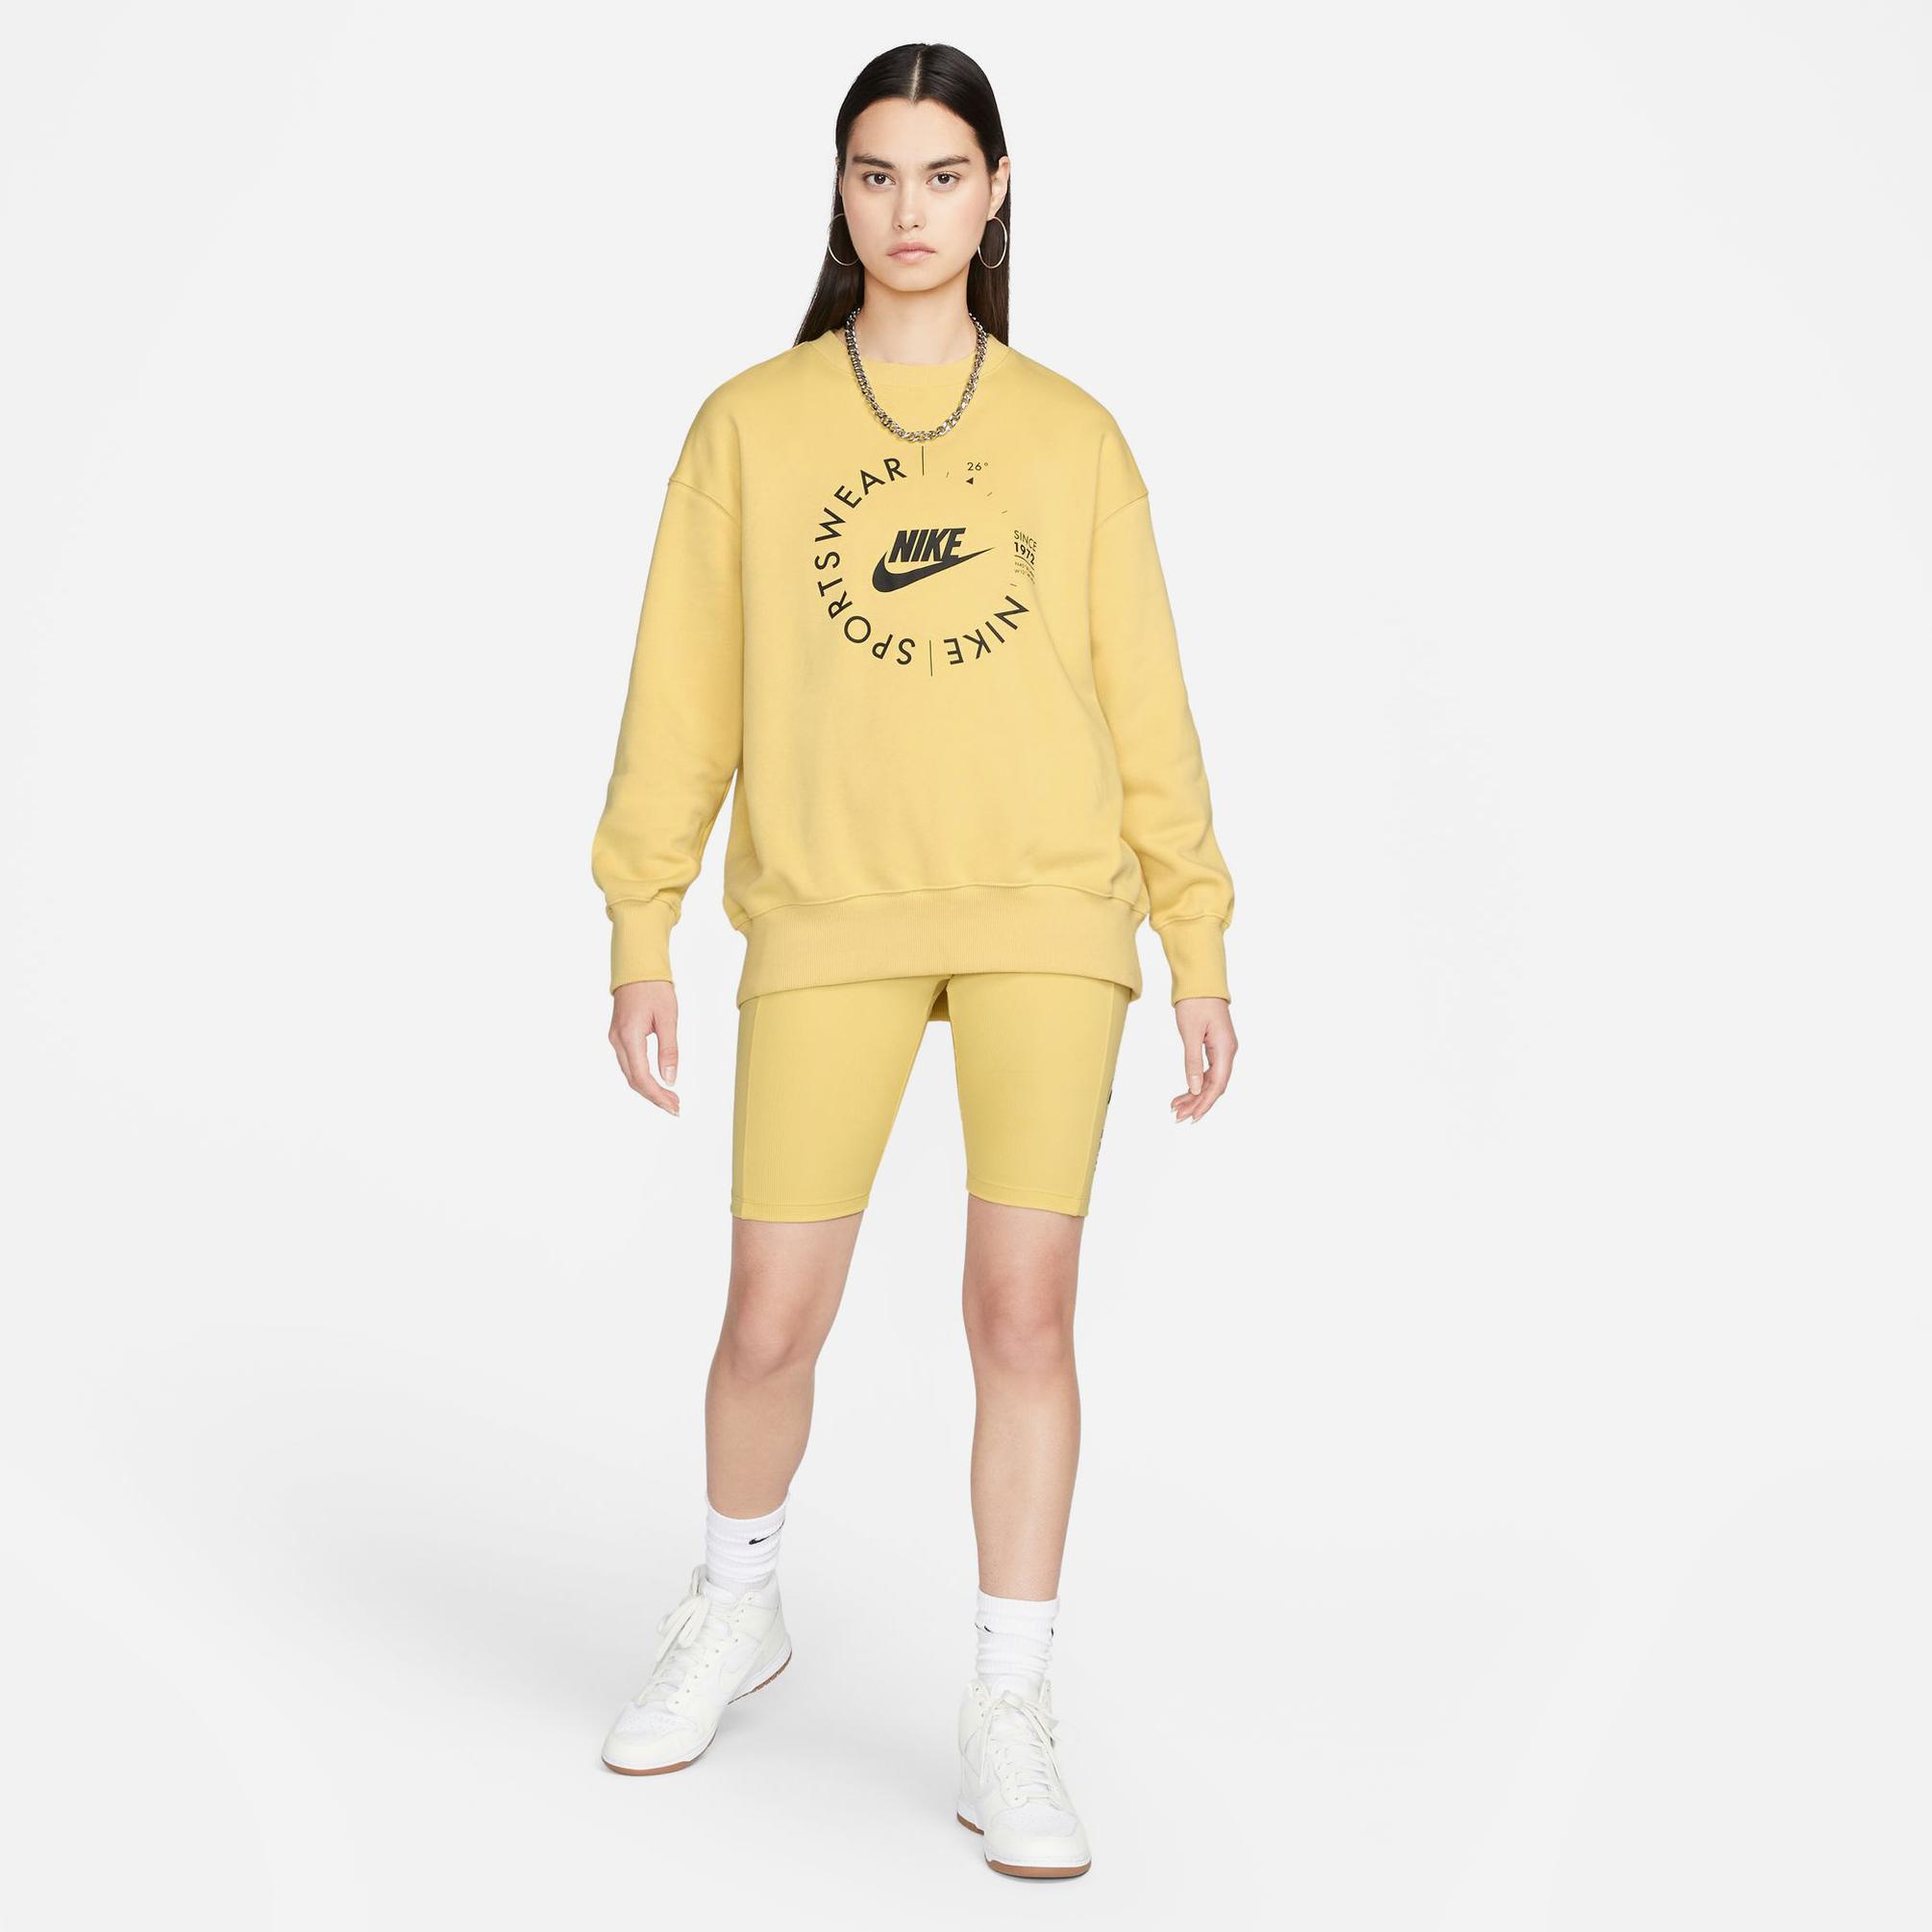  Nike Sportswear Oversized Sports Utility Crew-Neck Kadın Sarı Sweatshirt